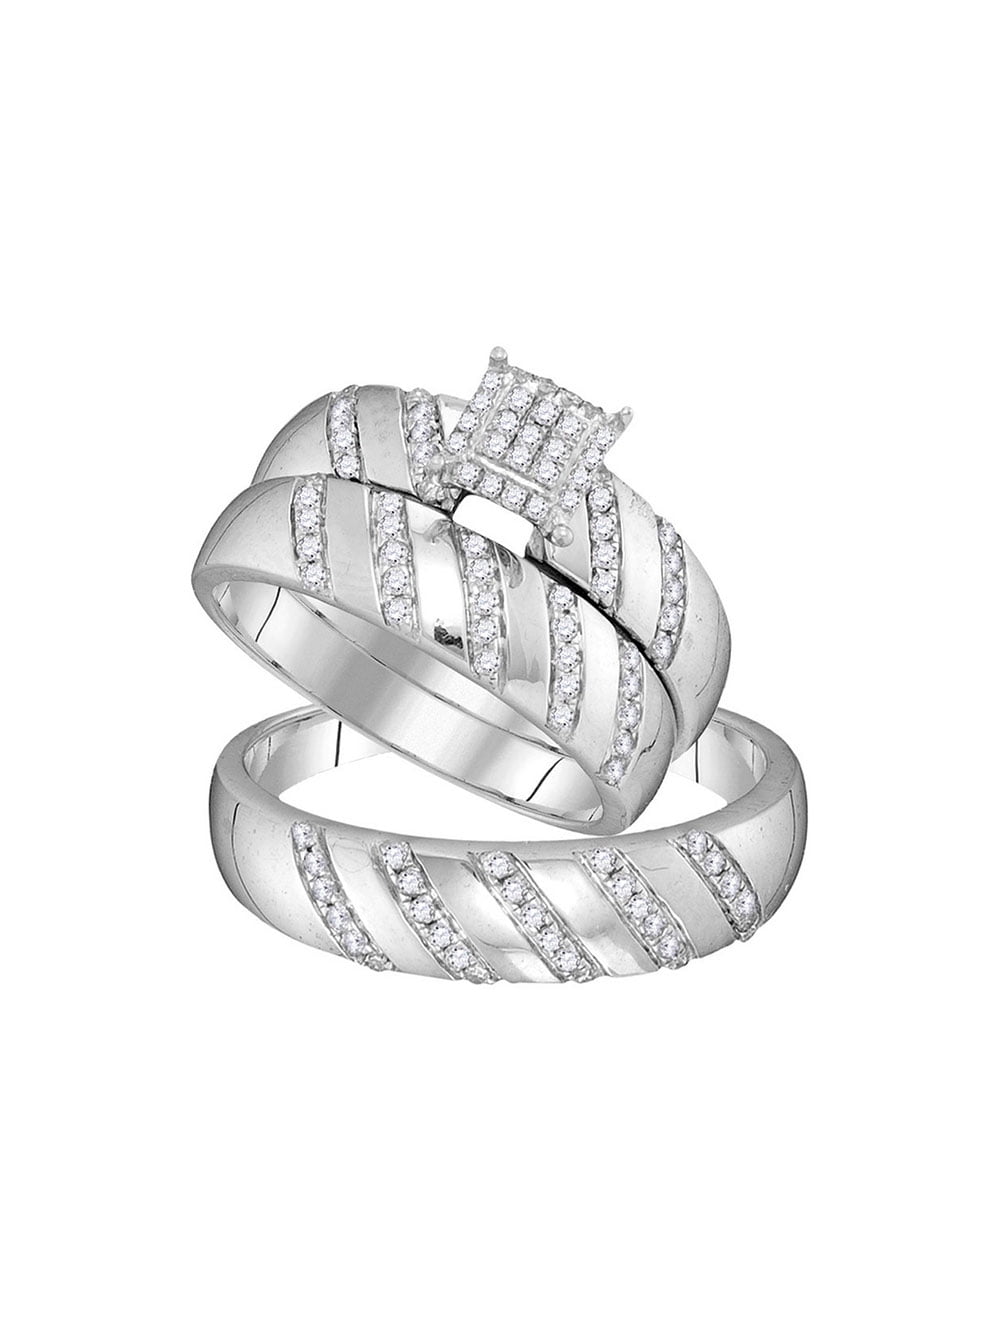 Details about   Round Pave Diamond Bridal Engagement Ladies Wedding Ring 14K White Gold Finish 